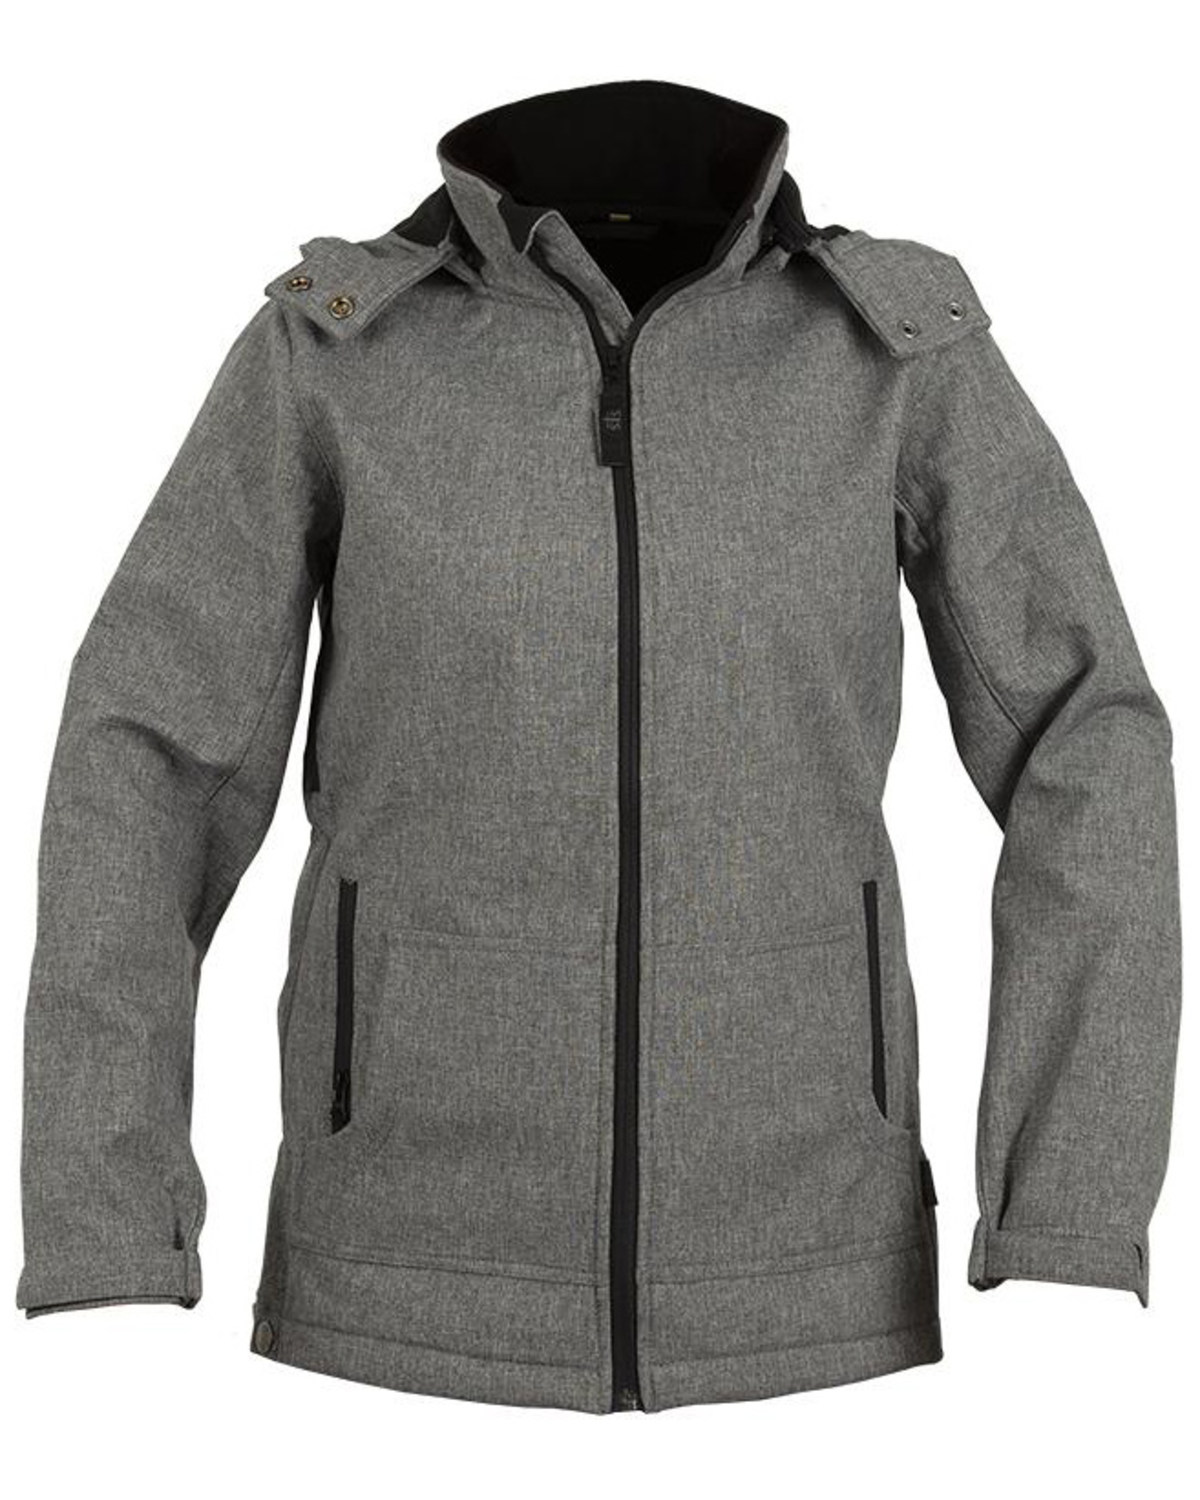 STS Ranchwear Women's Barrier Softshell Hooded Jacket